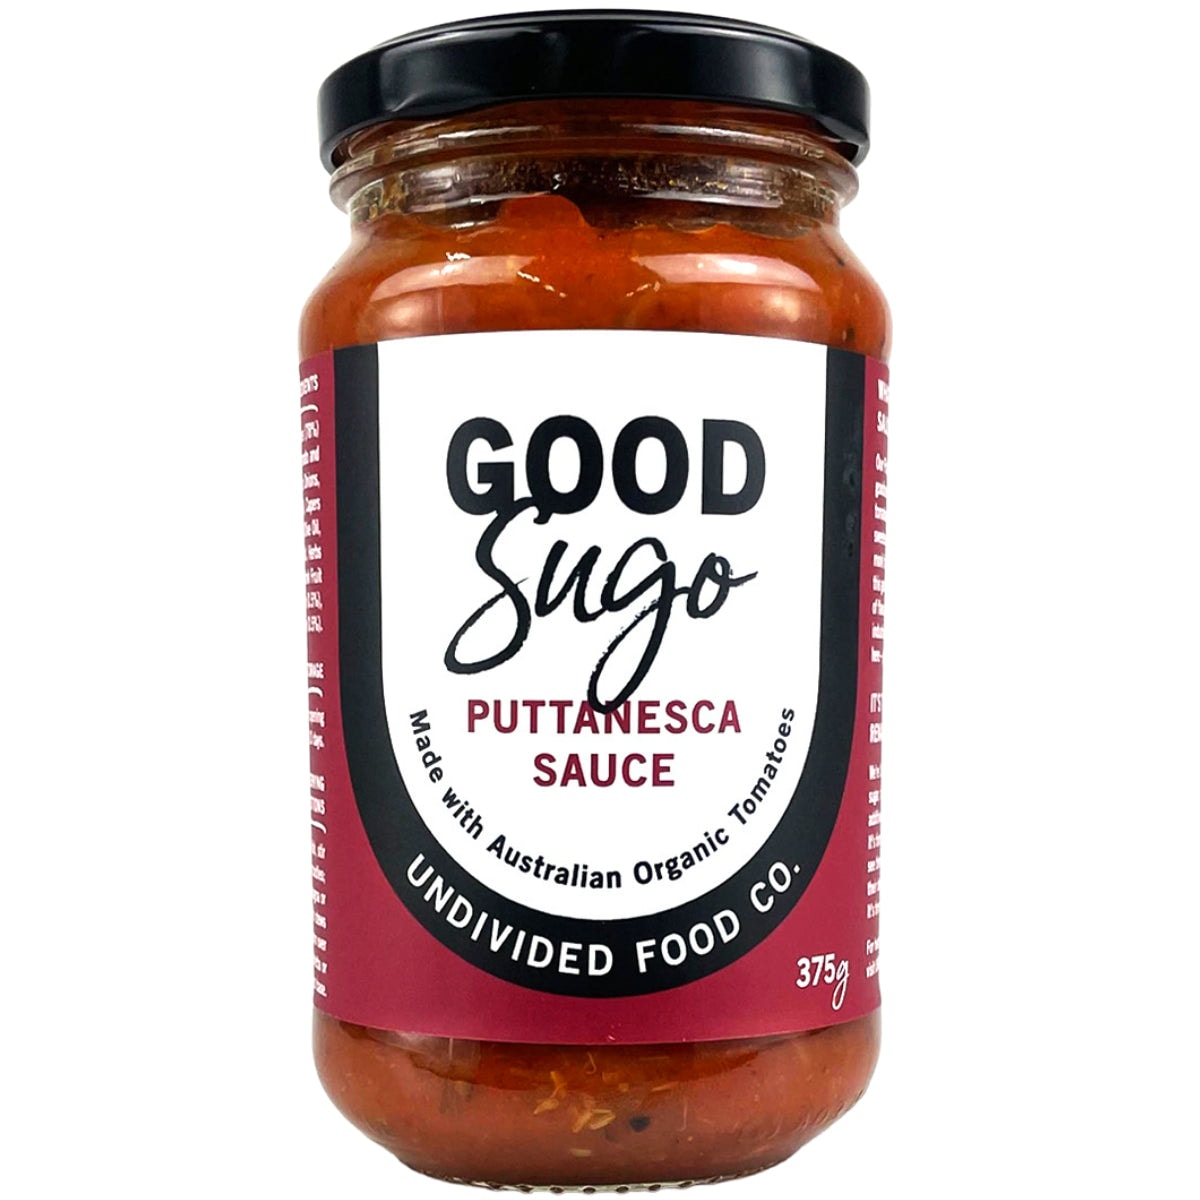 Undivided Food Co GOOD Sugo Puttanesca Sauce 375g